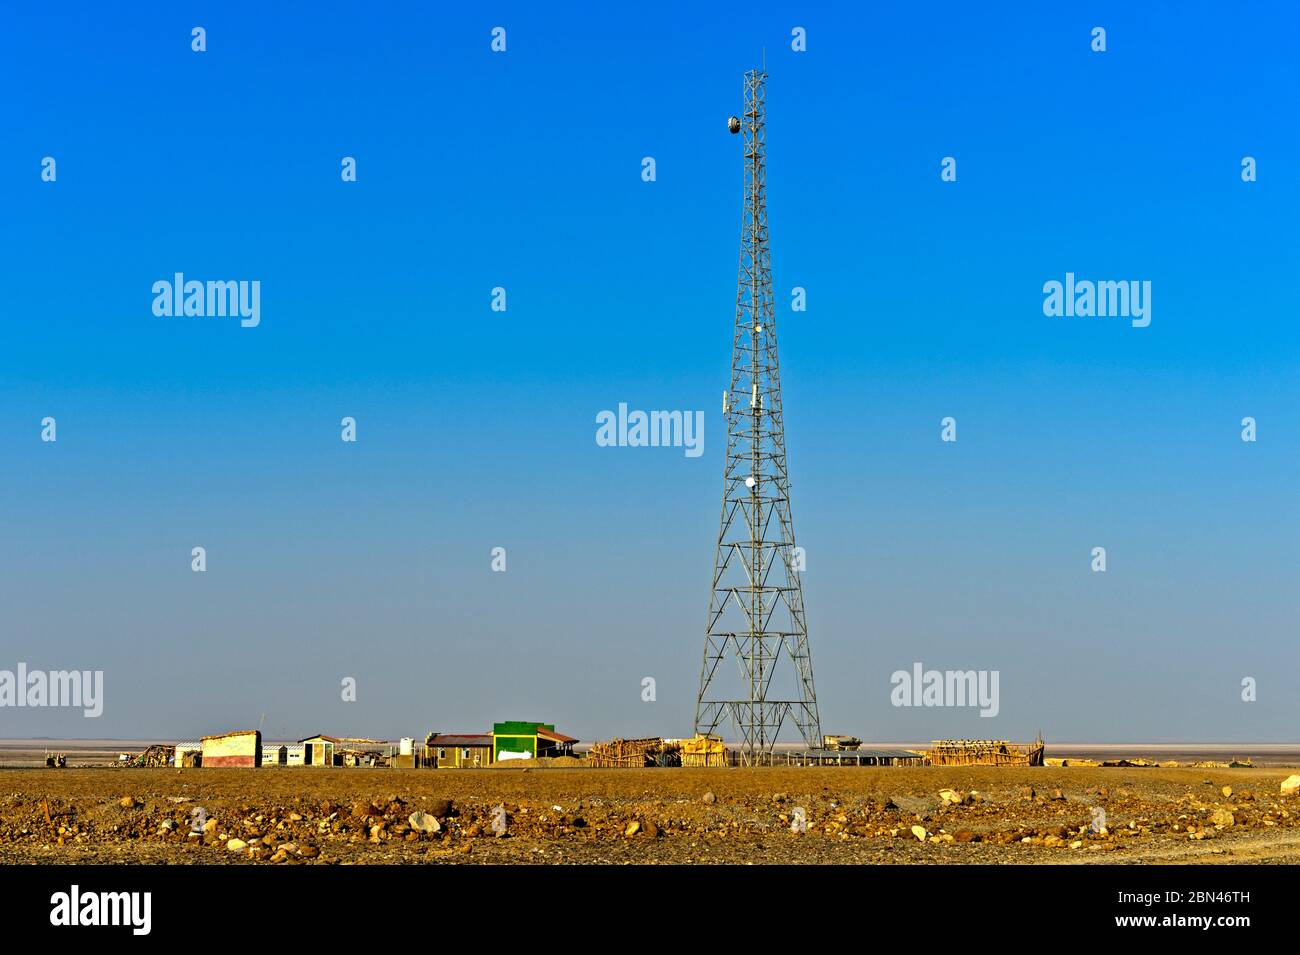 Micro-wave tower, Hamadela, Danakil Depression, Afar Province, Ethiopia Stock Photo